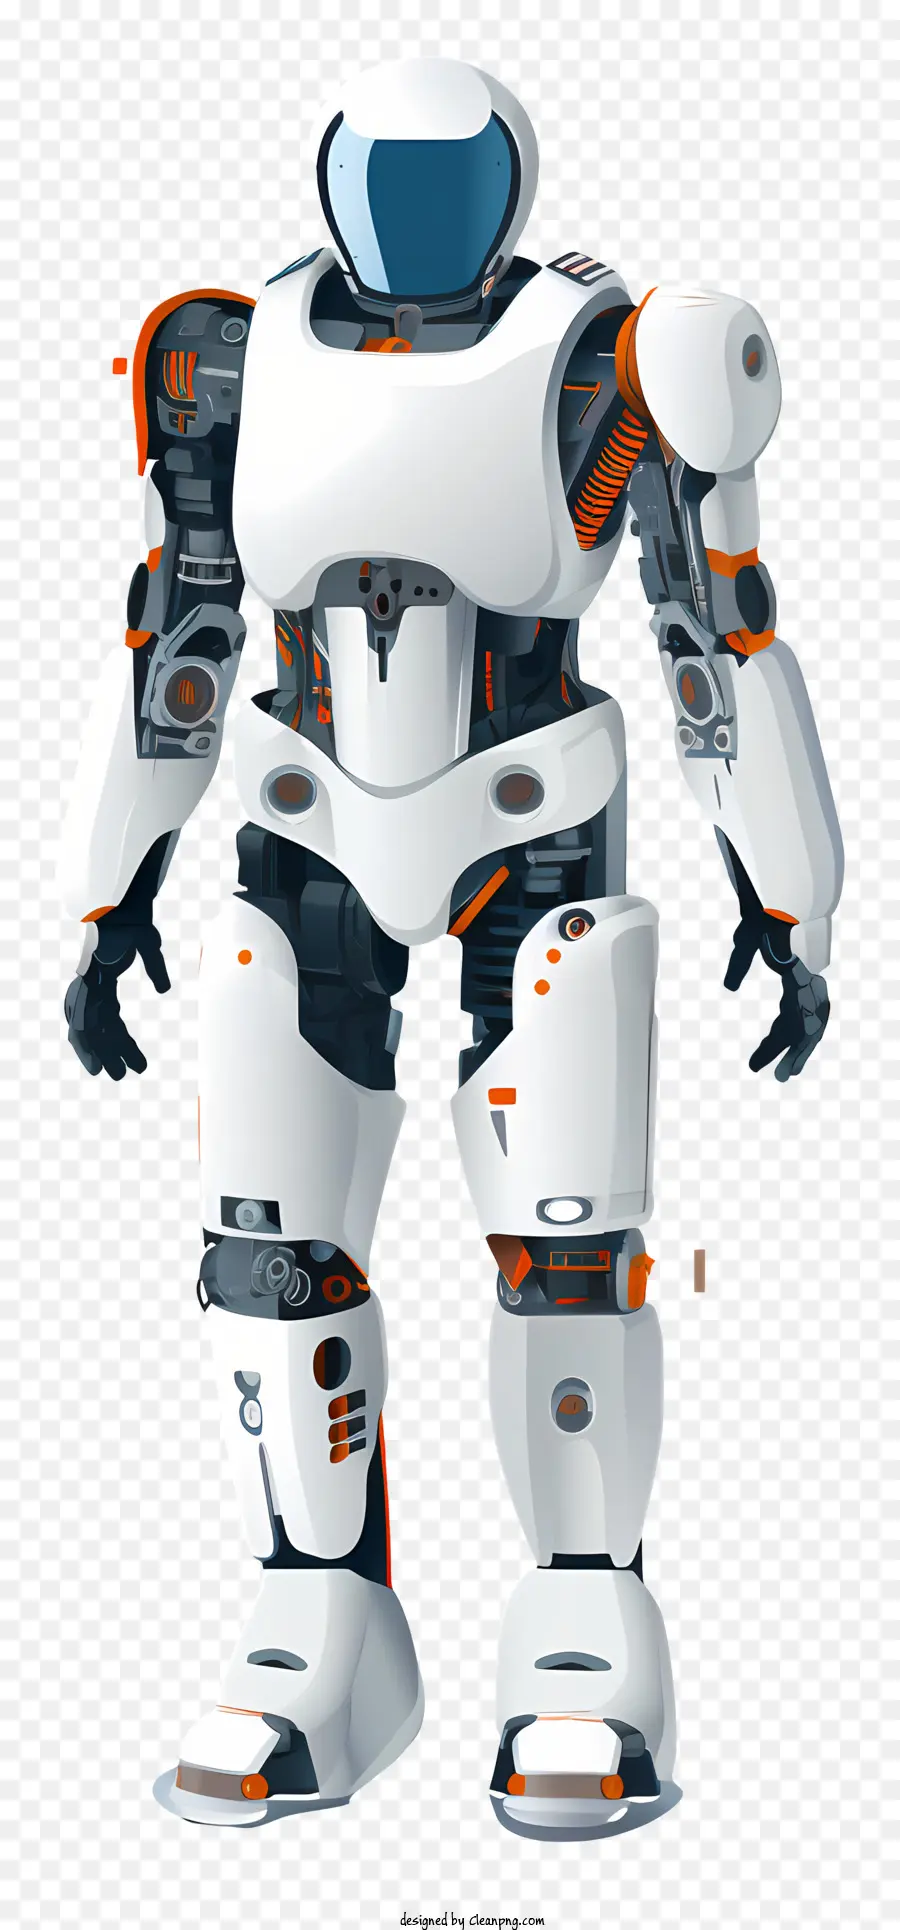 humanoid robot white and orange robot mechanical appearance silver and orange body two orange eyes